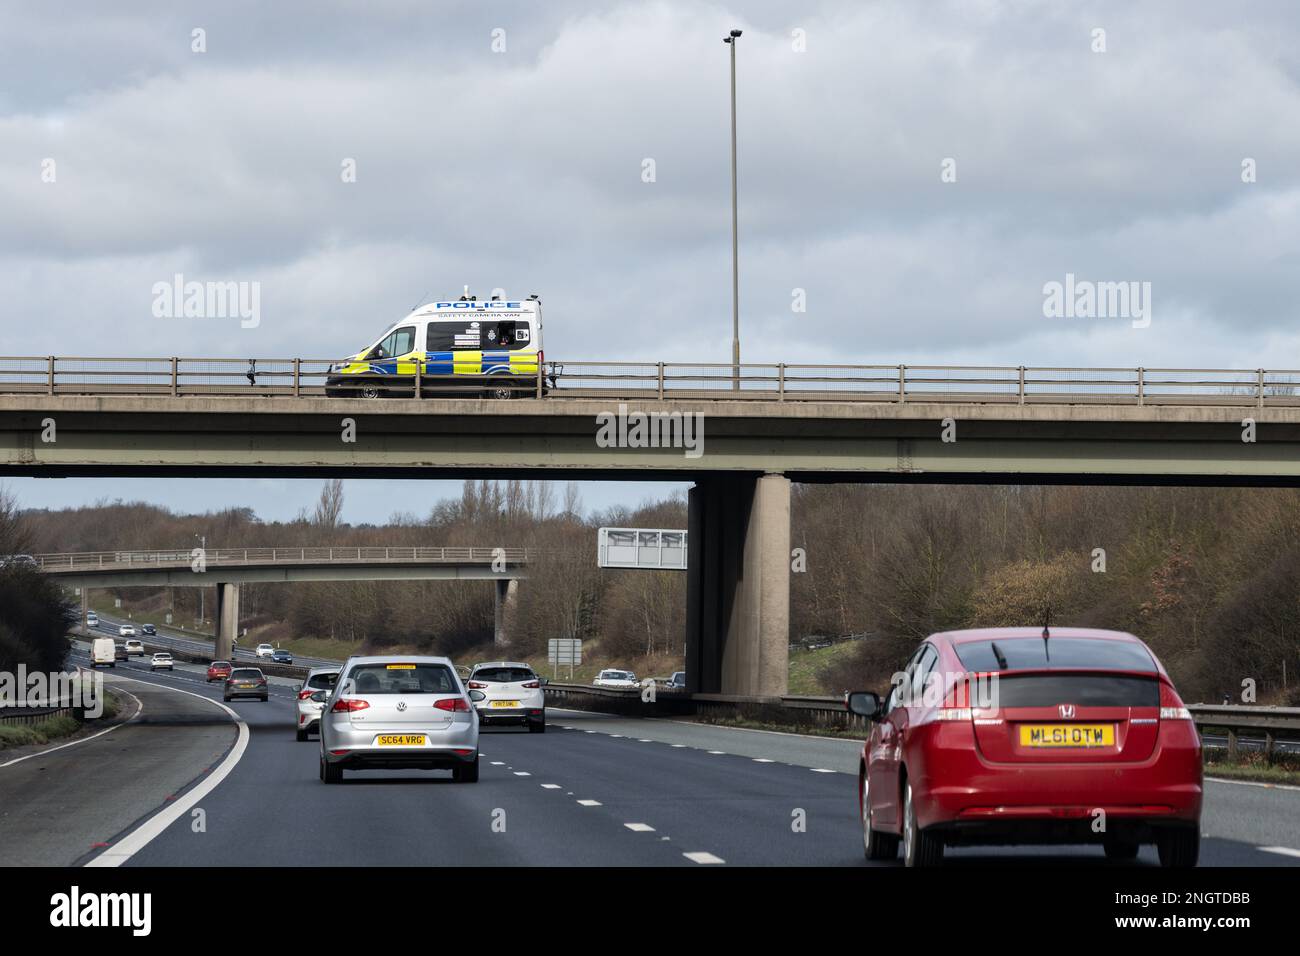 Police safety camera van on motorway bridge - England UK Stock Photo